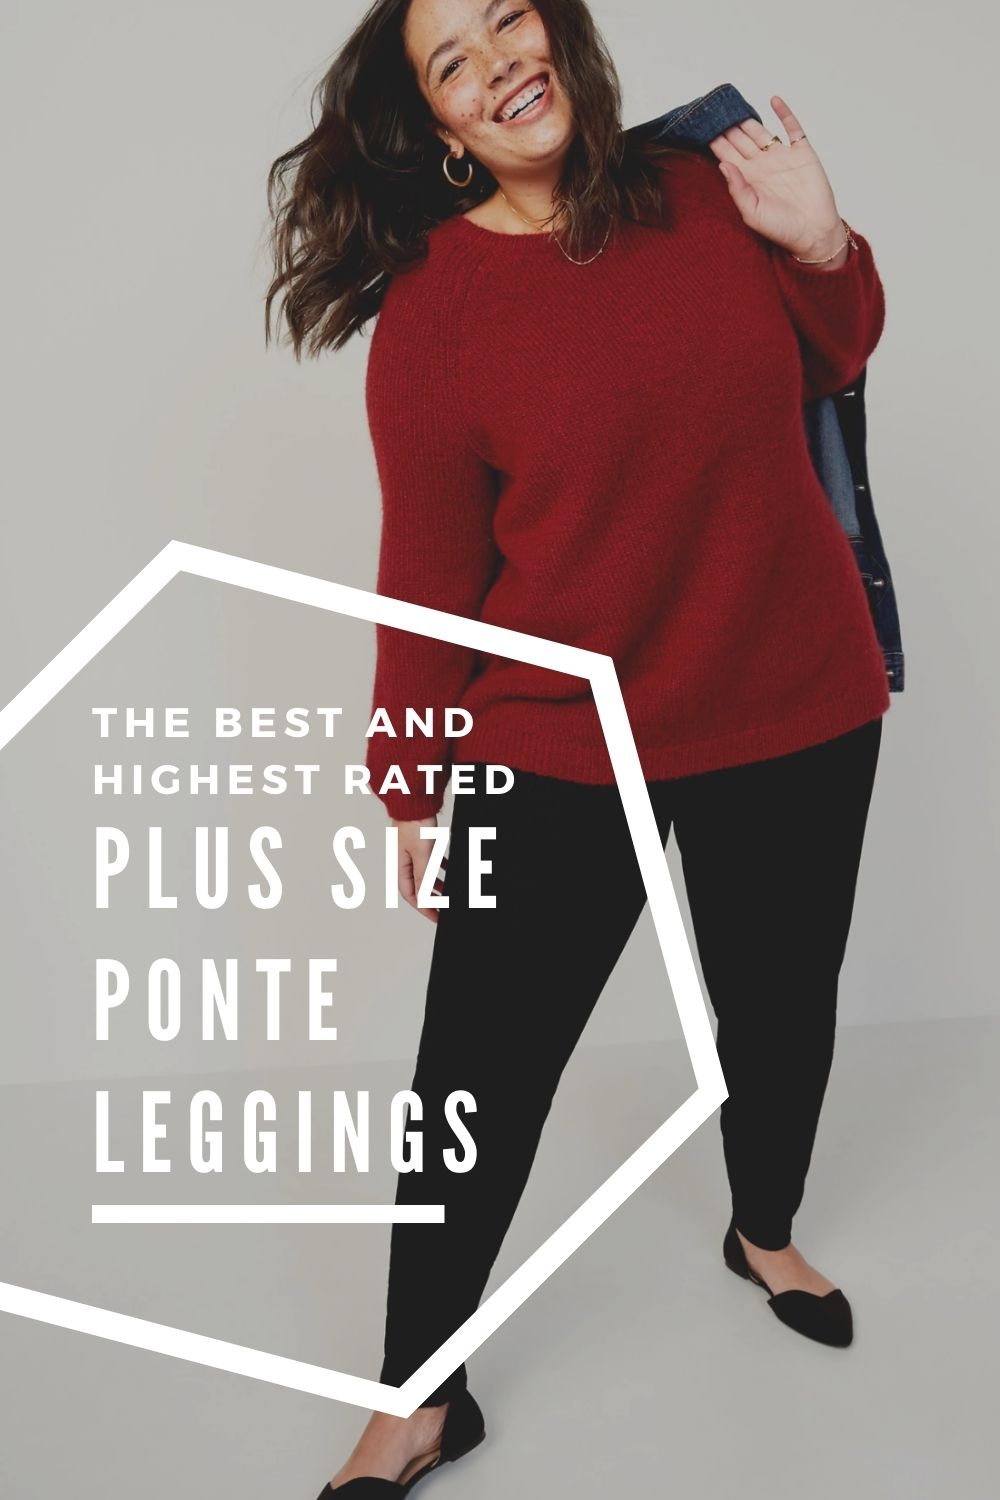 The Best Plus Size Ponte Leggings: 7 Winning Brands